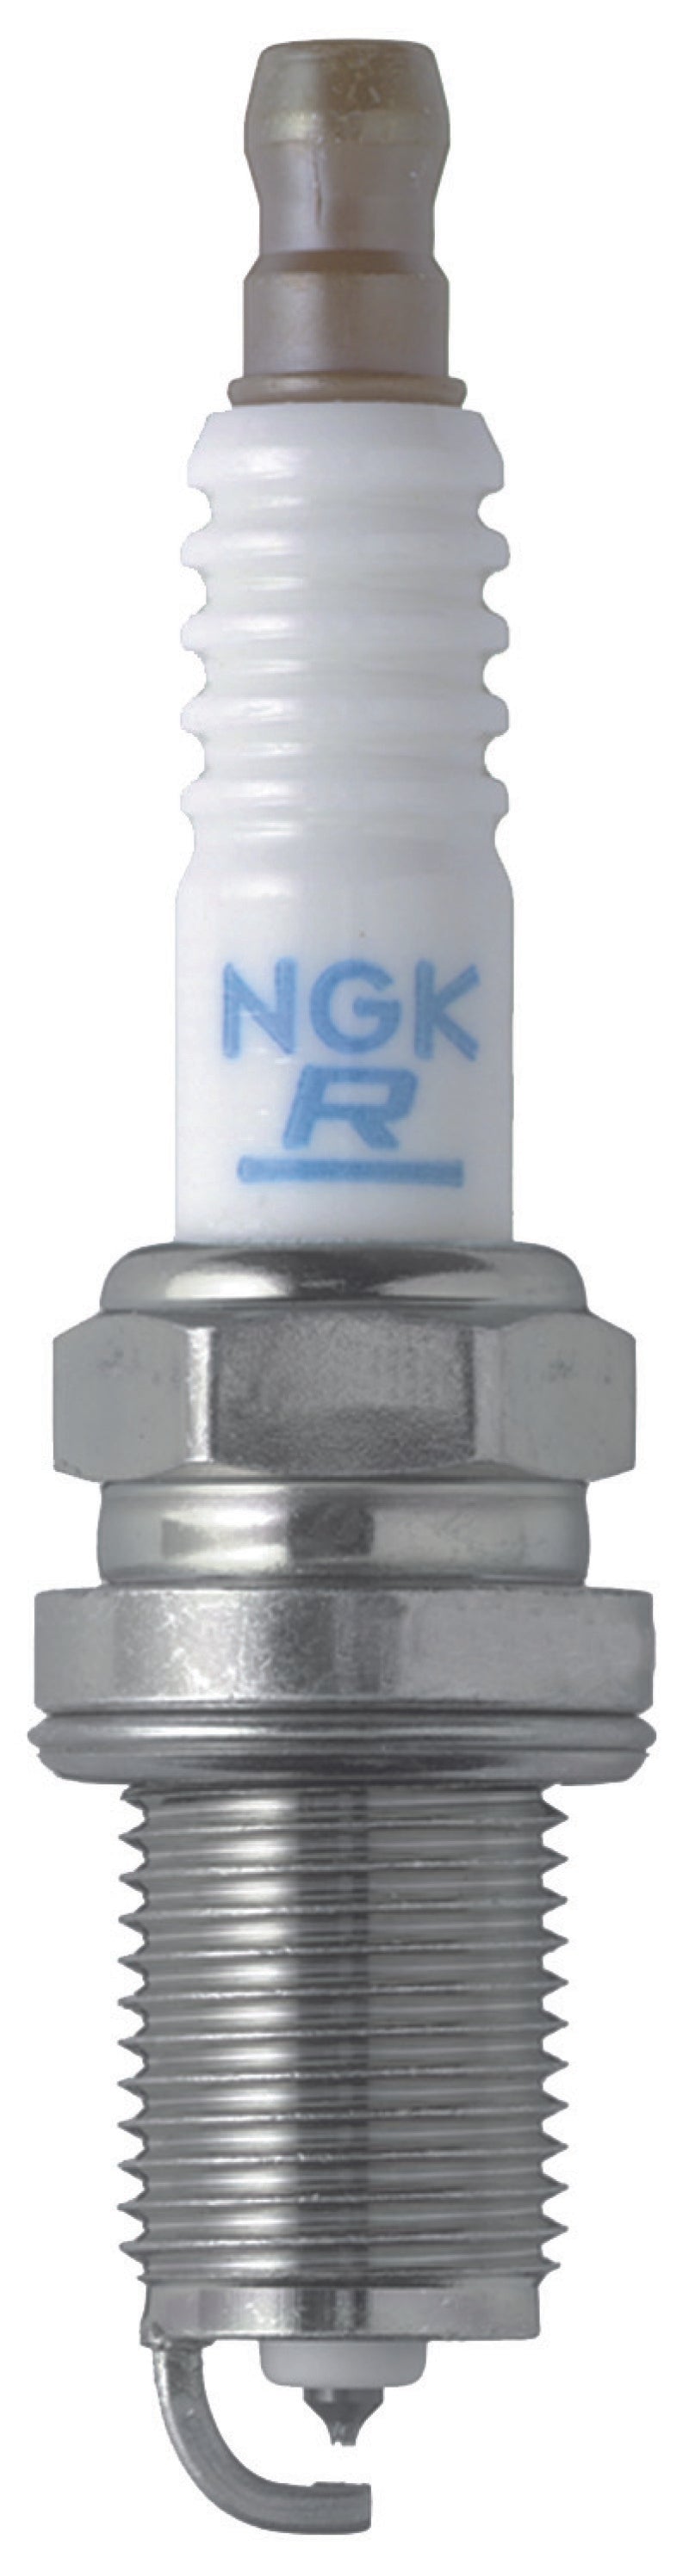 NGK - Laser Platiumn Spark Plug Box of 4 (PFR7G-11S)